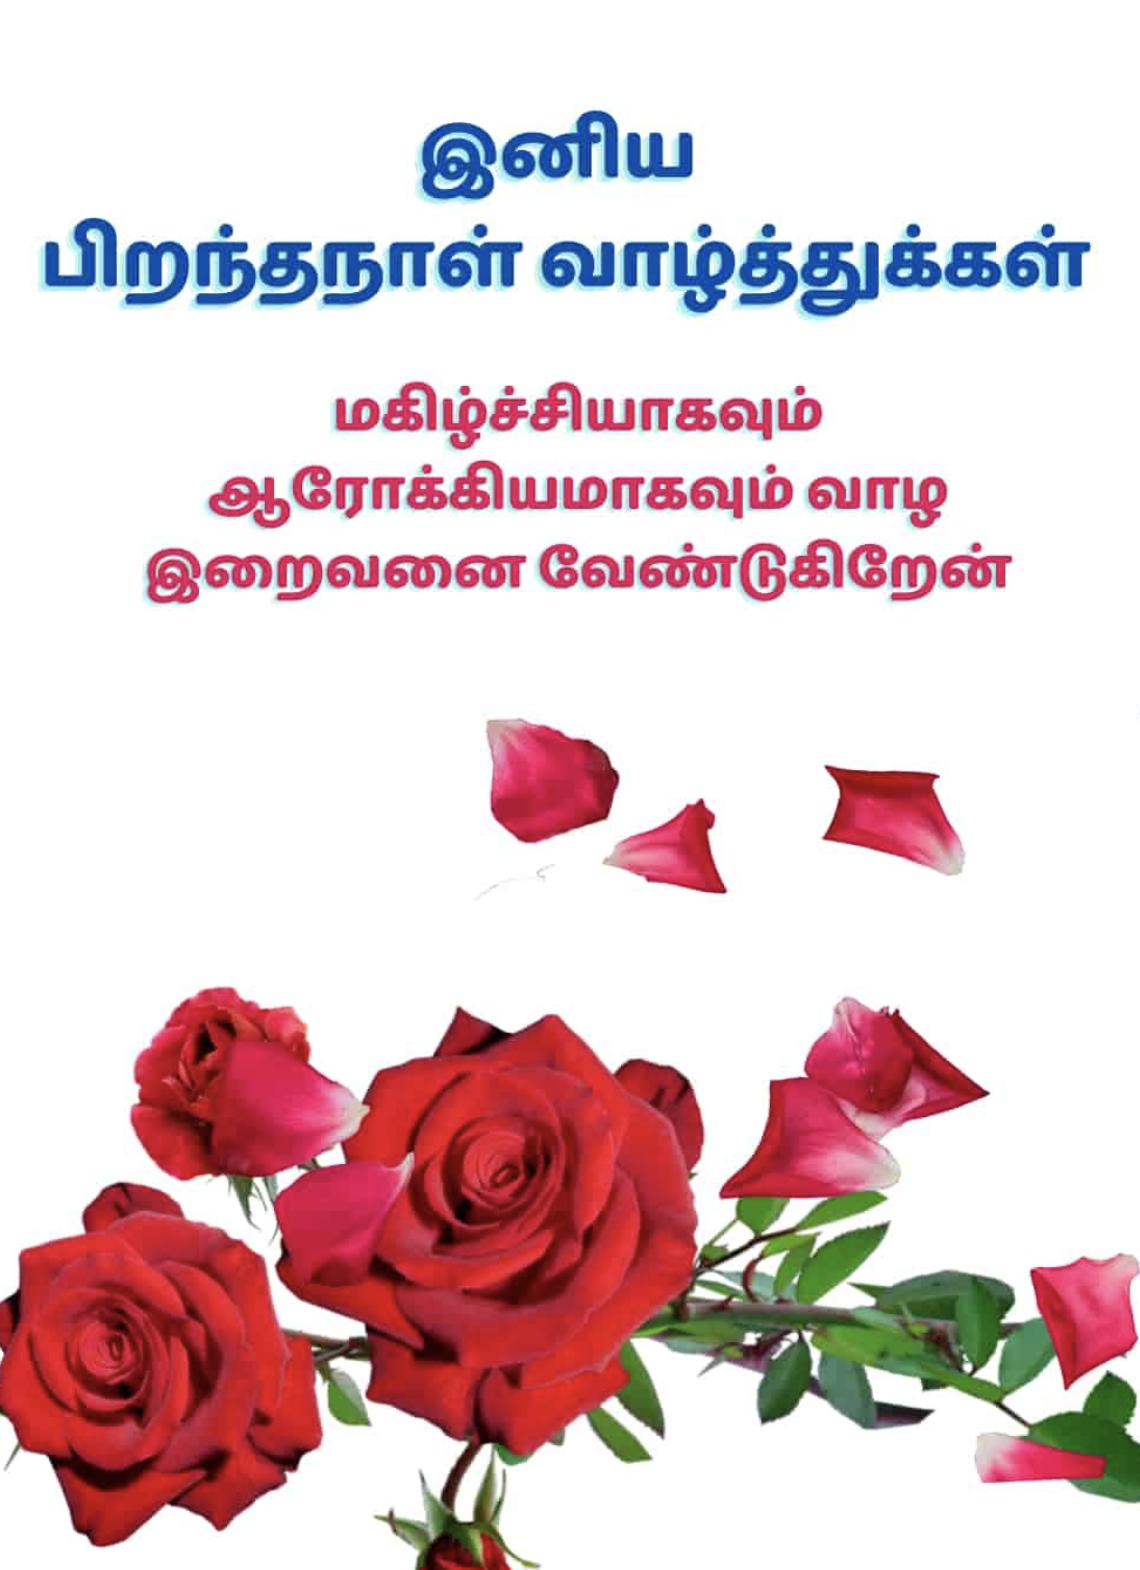 Birthday wishes Tamil Language